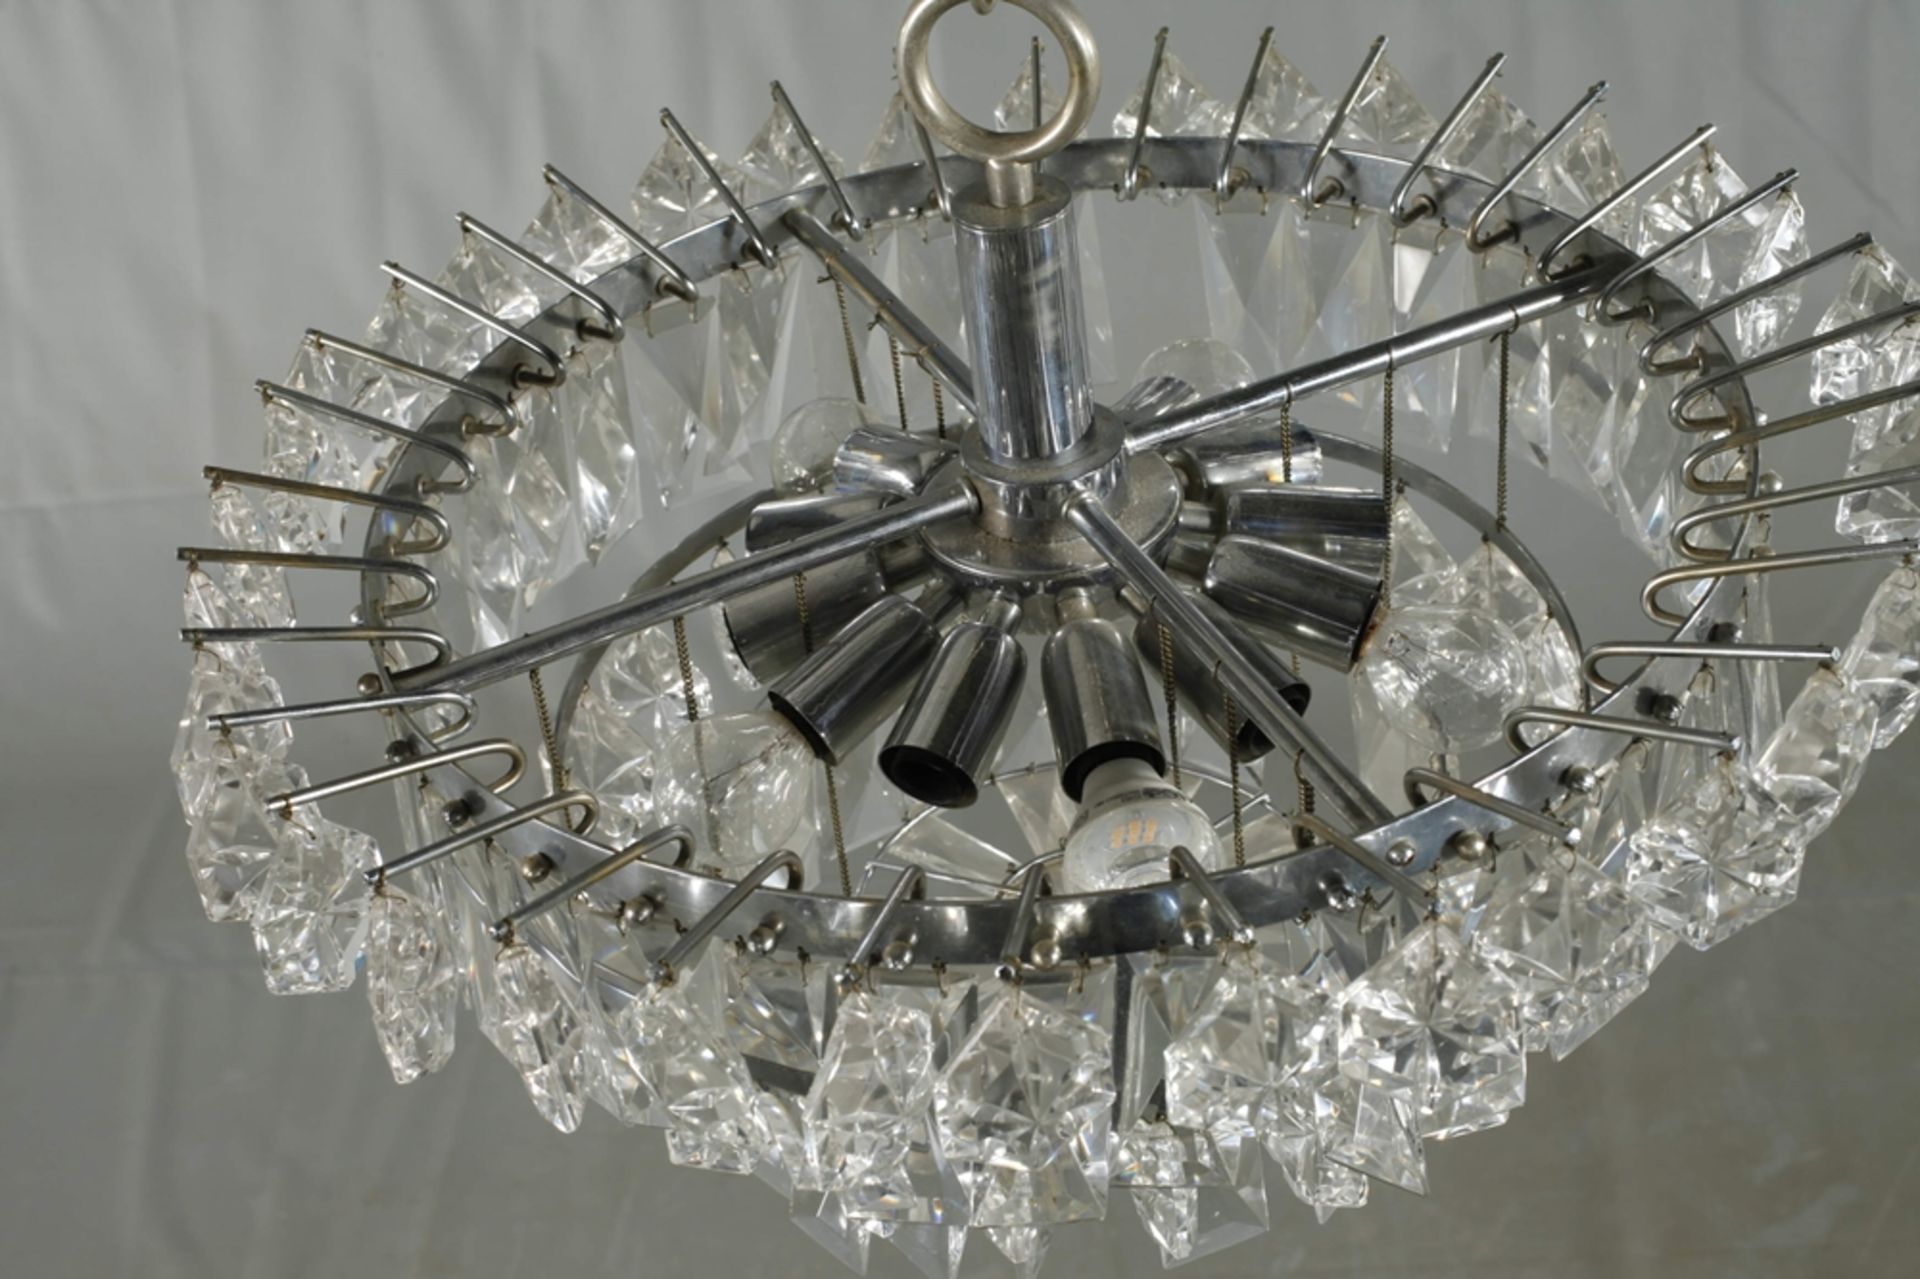 Ceiling lamp design - Image 5 of 6